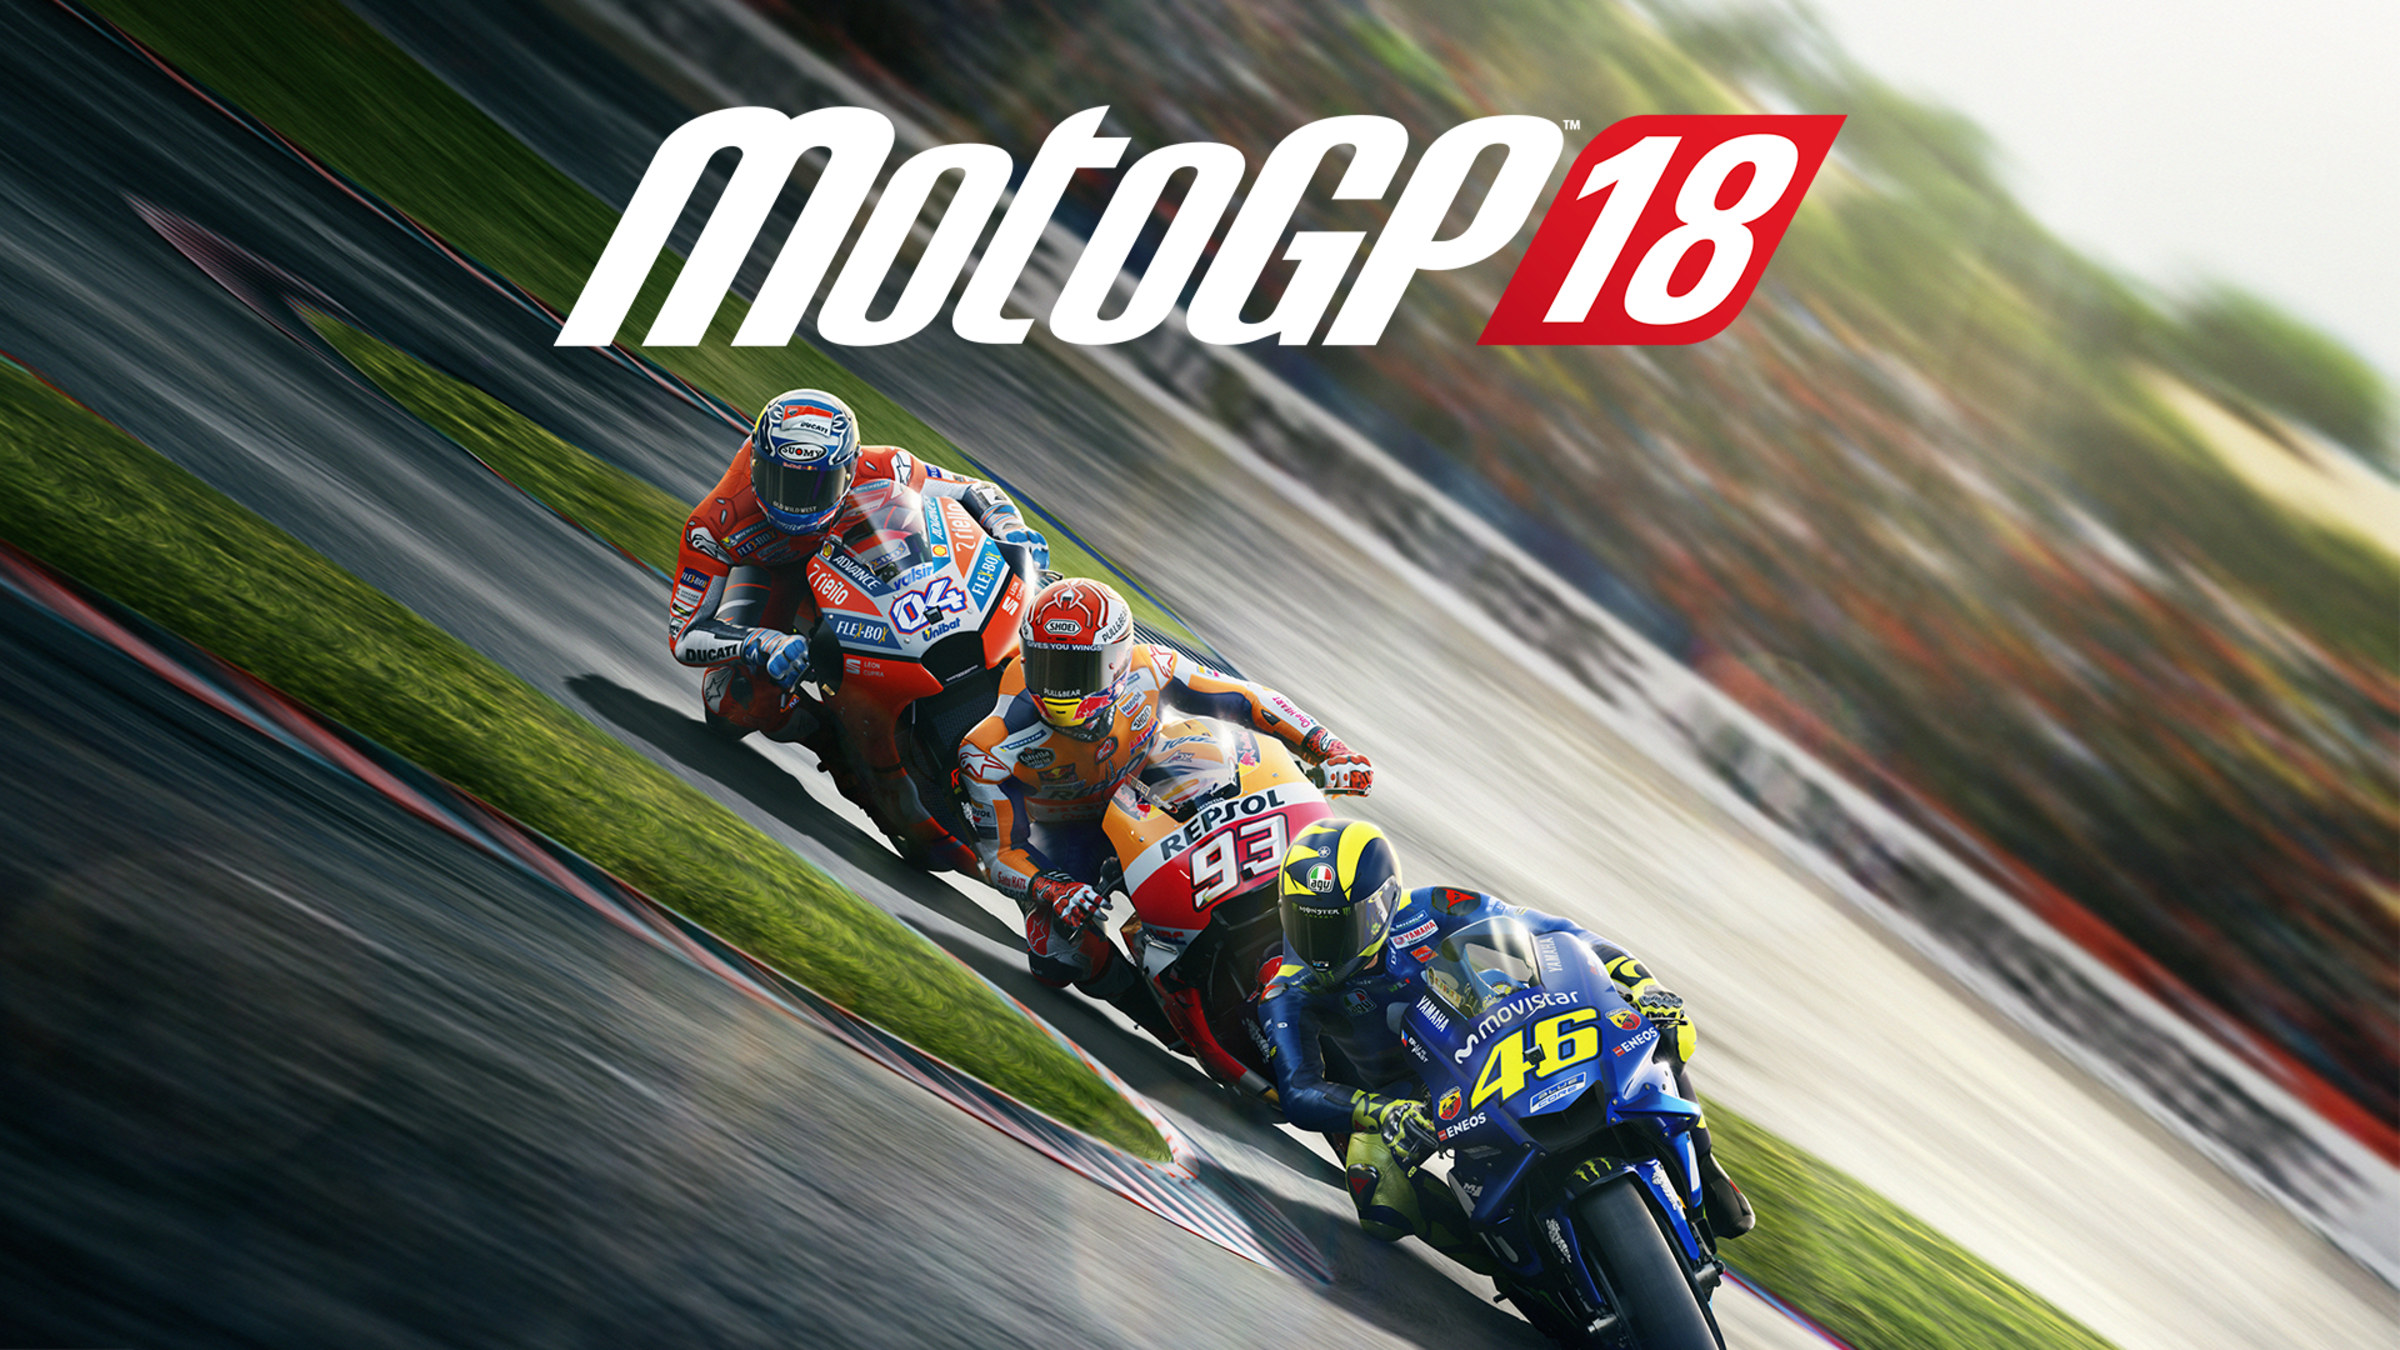 MotoGP™18 for Nintendo Switch